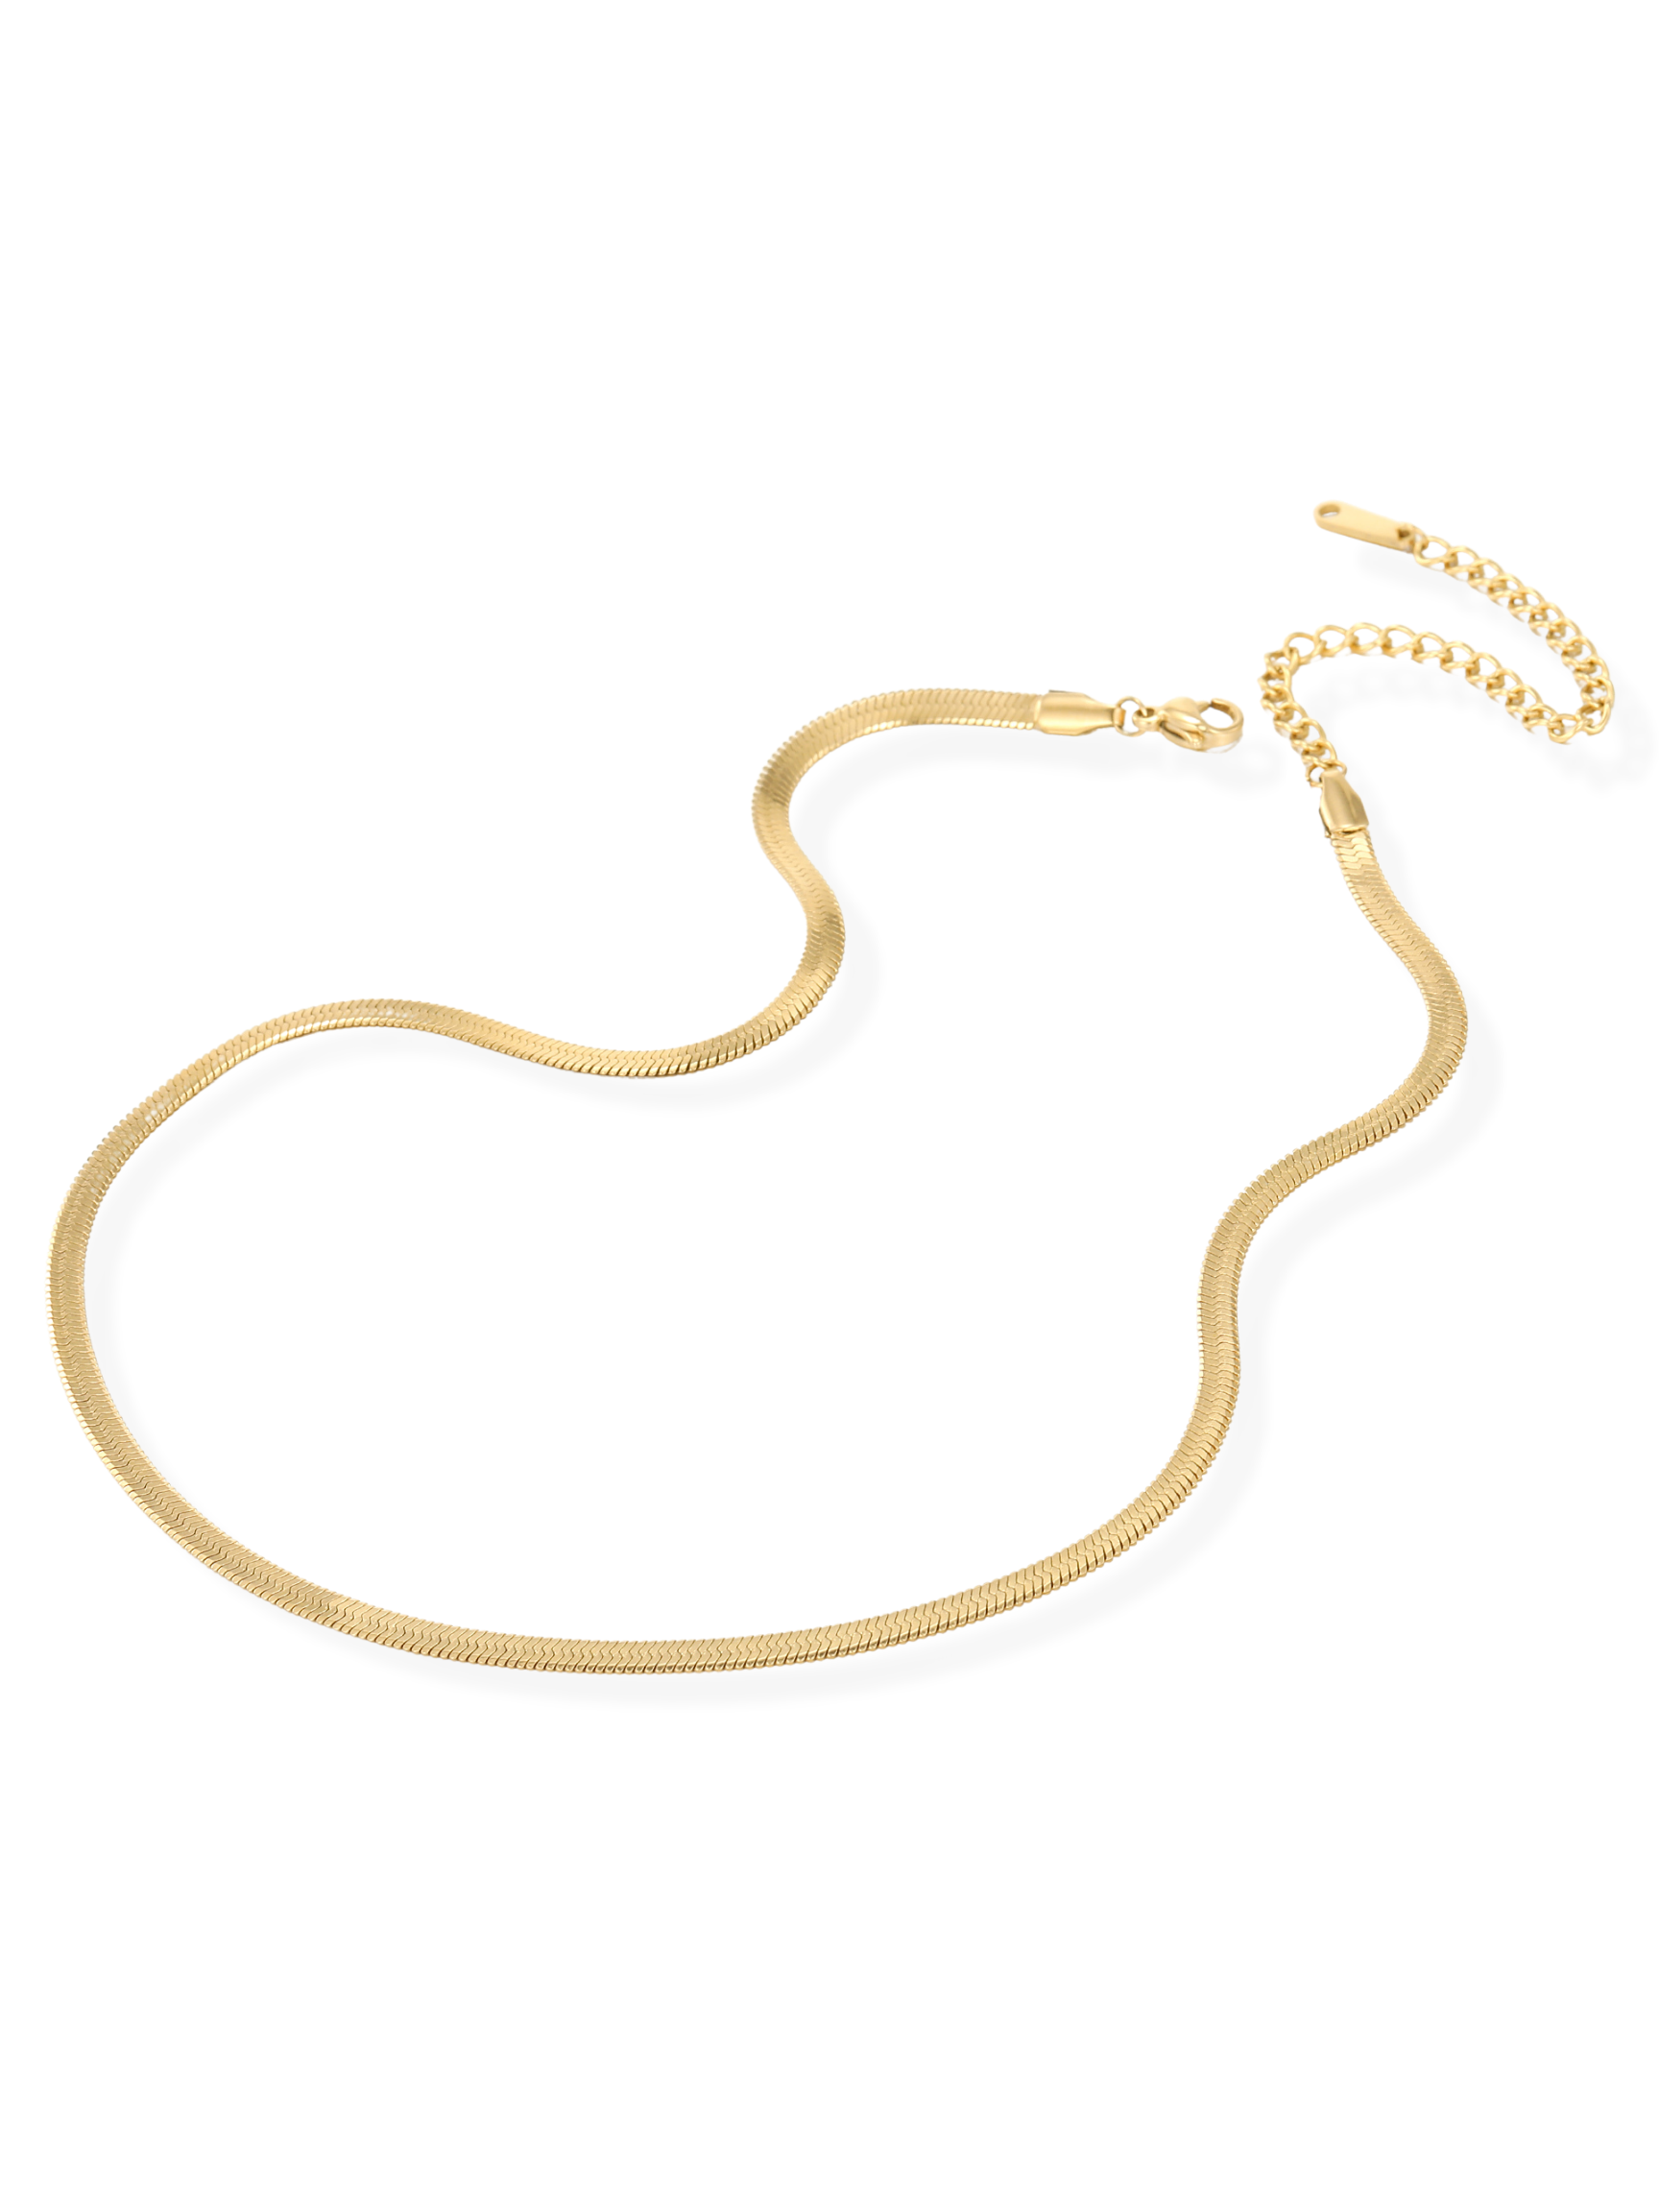 gold-filled herringbone necklace 